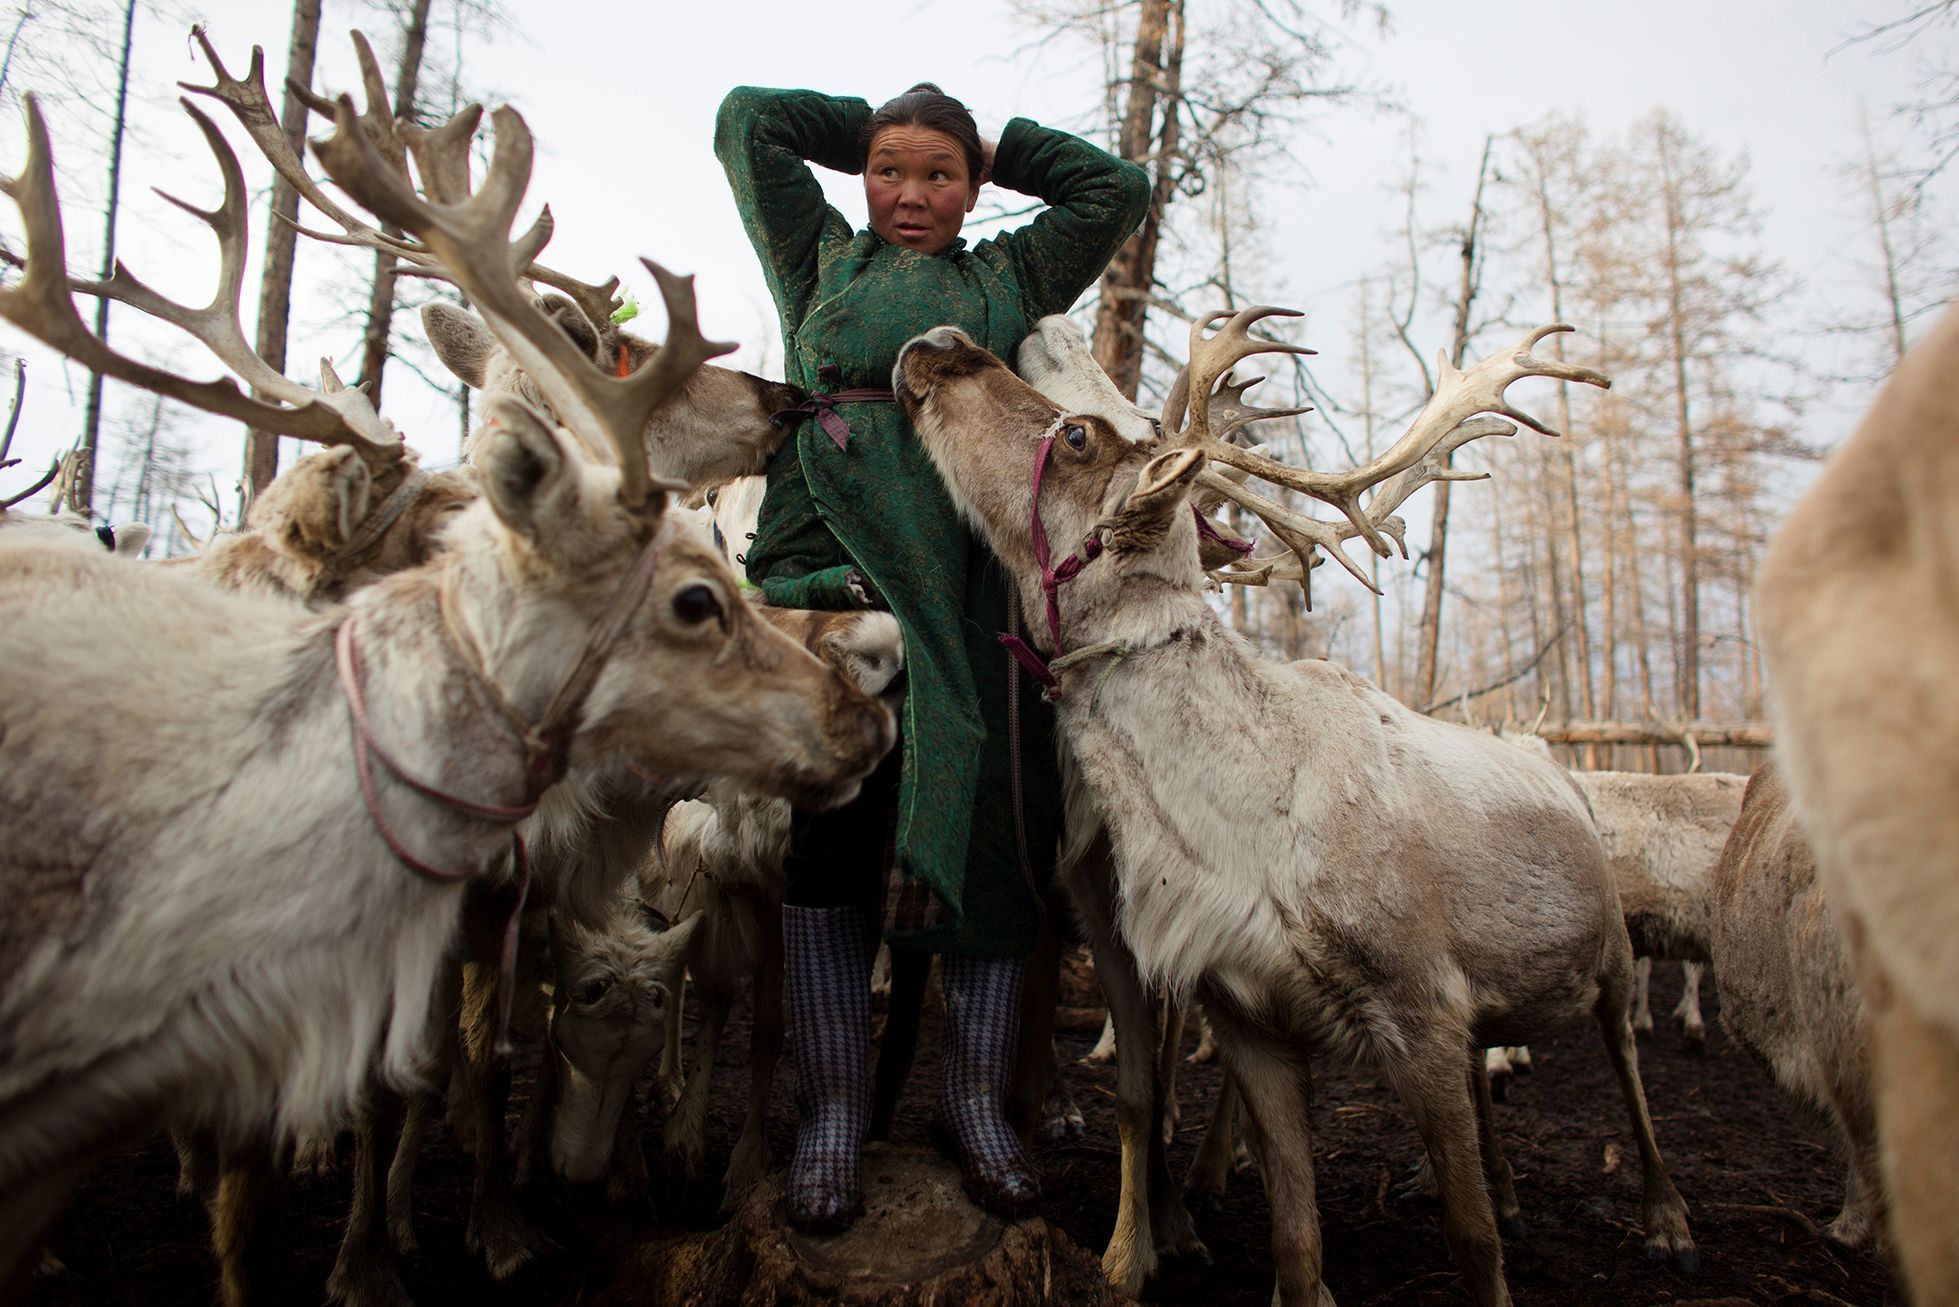 FOTOGALERIE / Život kočovných pastýřů v Mongolsku / Reuters / rok 2018 / 7